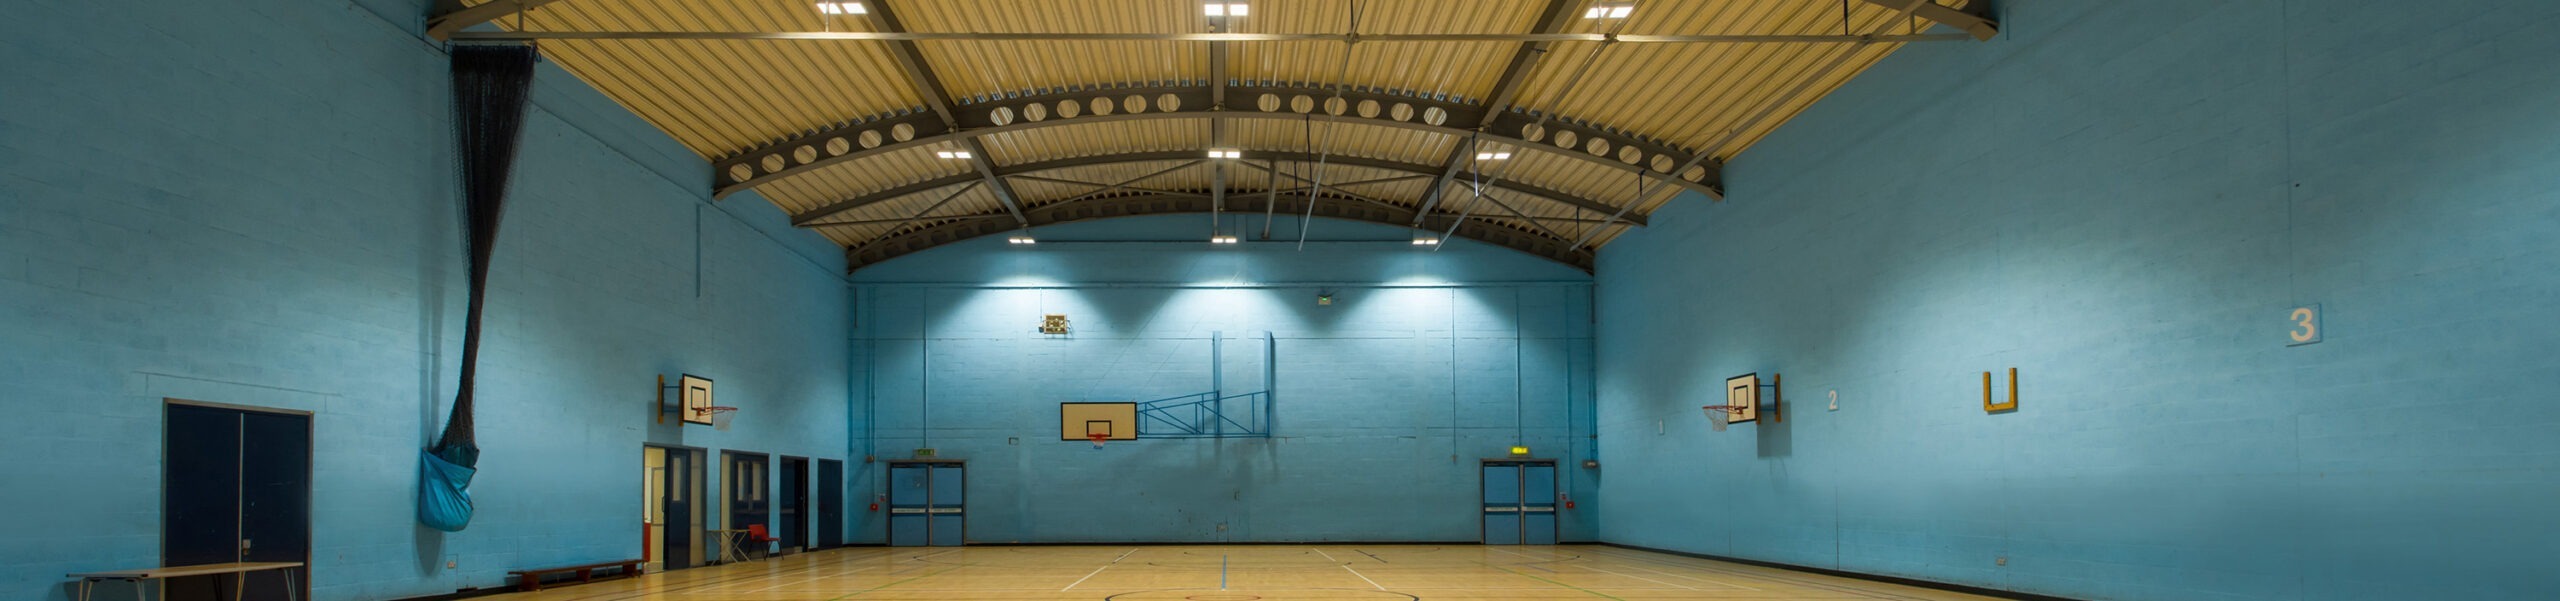 Tamlite Abbey School Faversham Sports LED lighting case study header